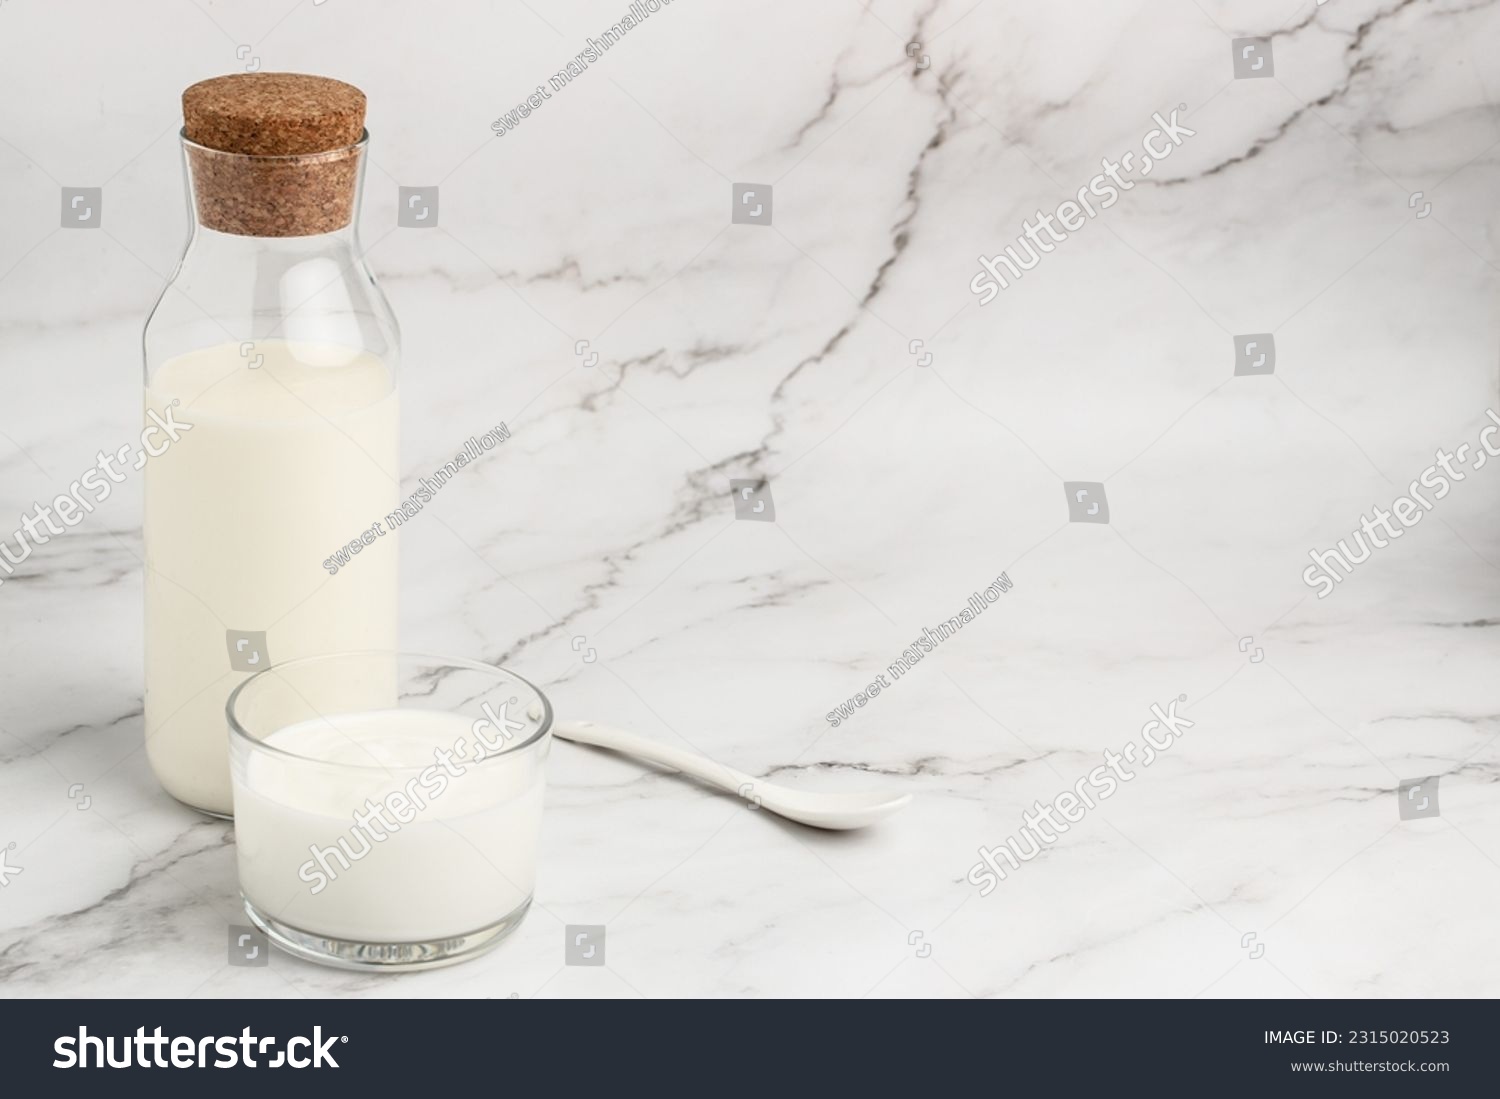 lactose free yogurt, kefir, fermented milk on a light background. Healthy, clean eating. Vegan or gluten free diet, #2315020523